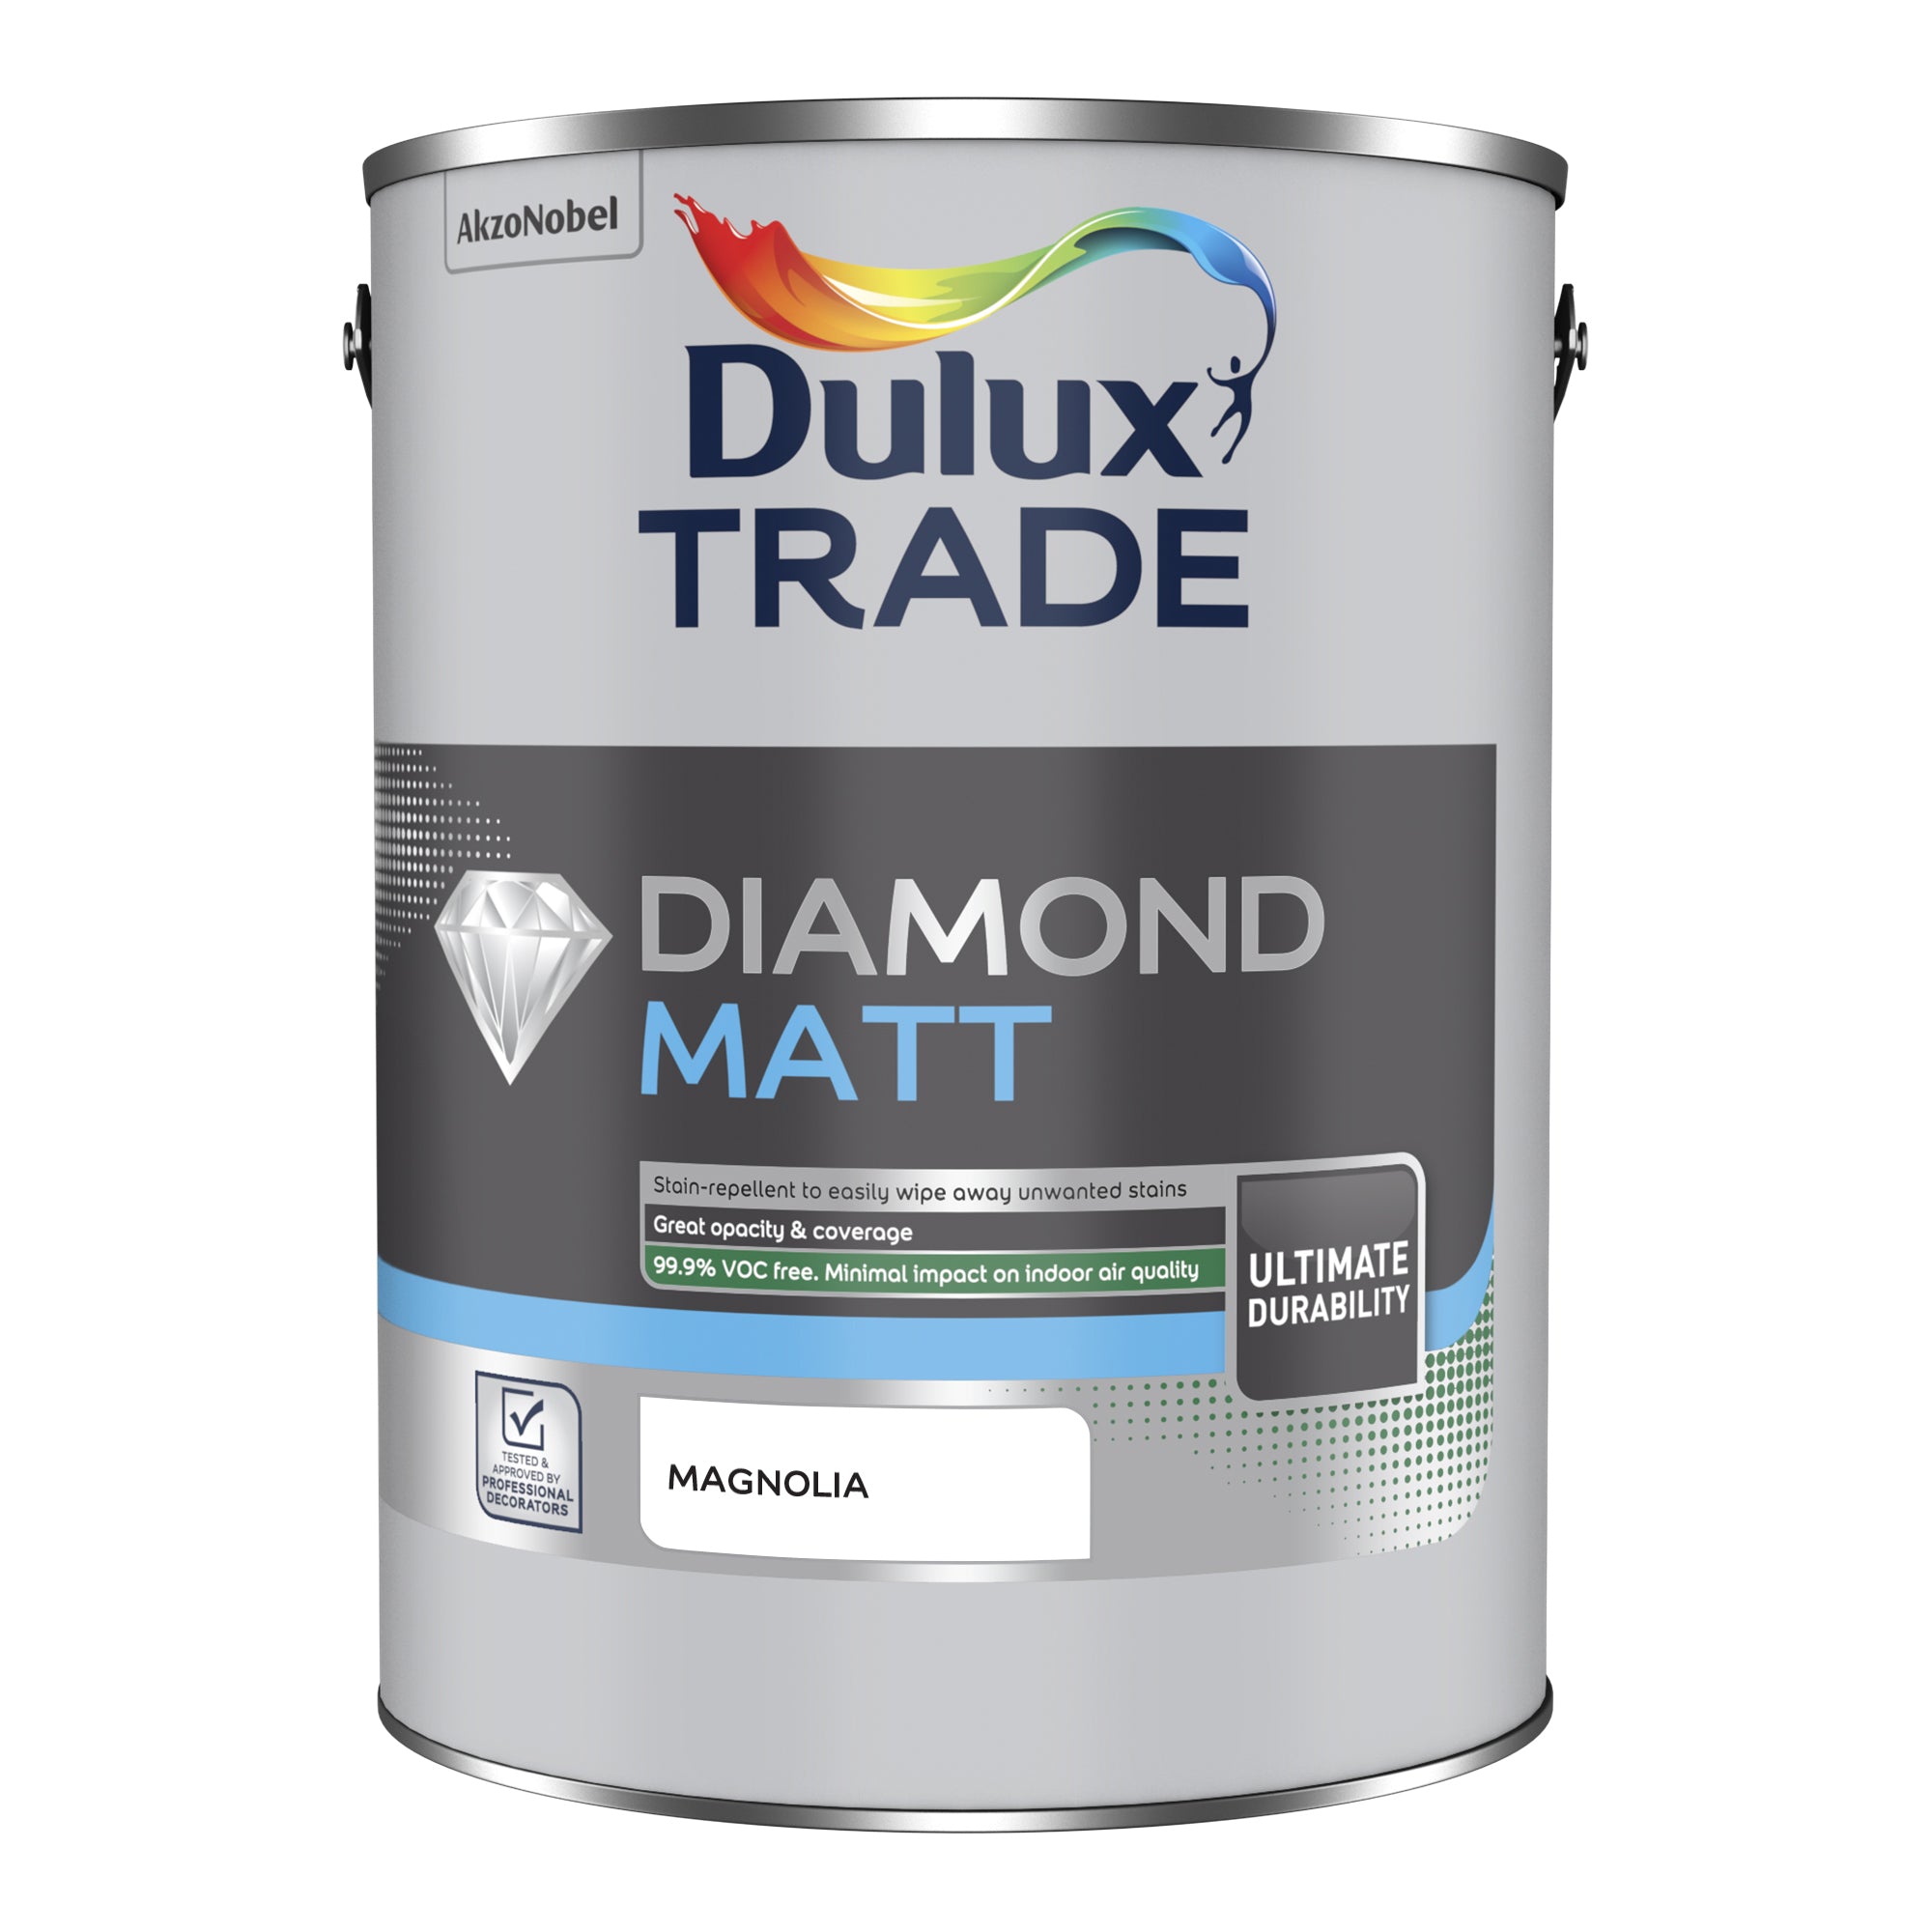 Dulux Trade Diamond Matt Magnolia 5L